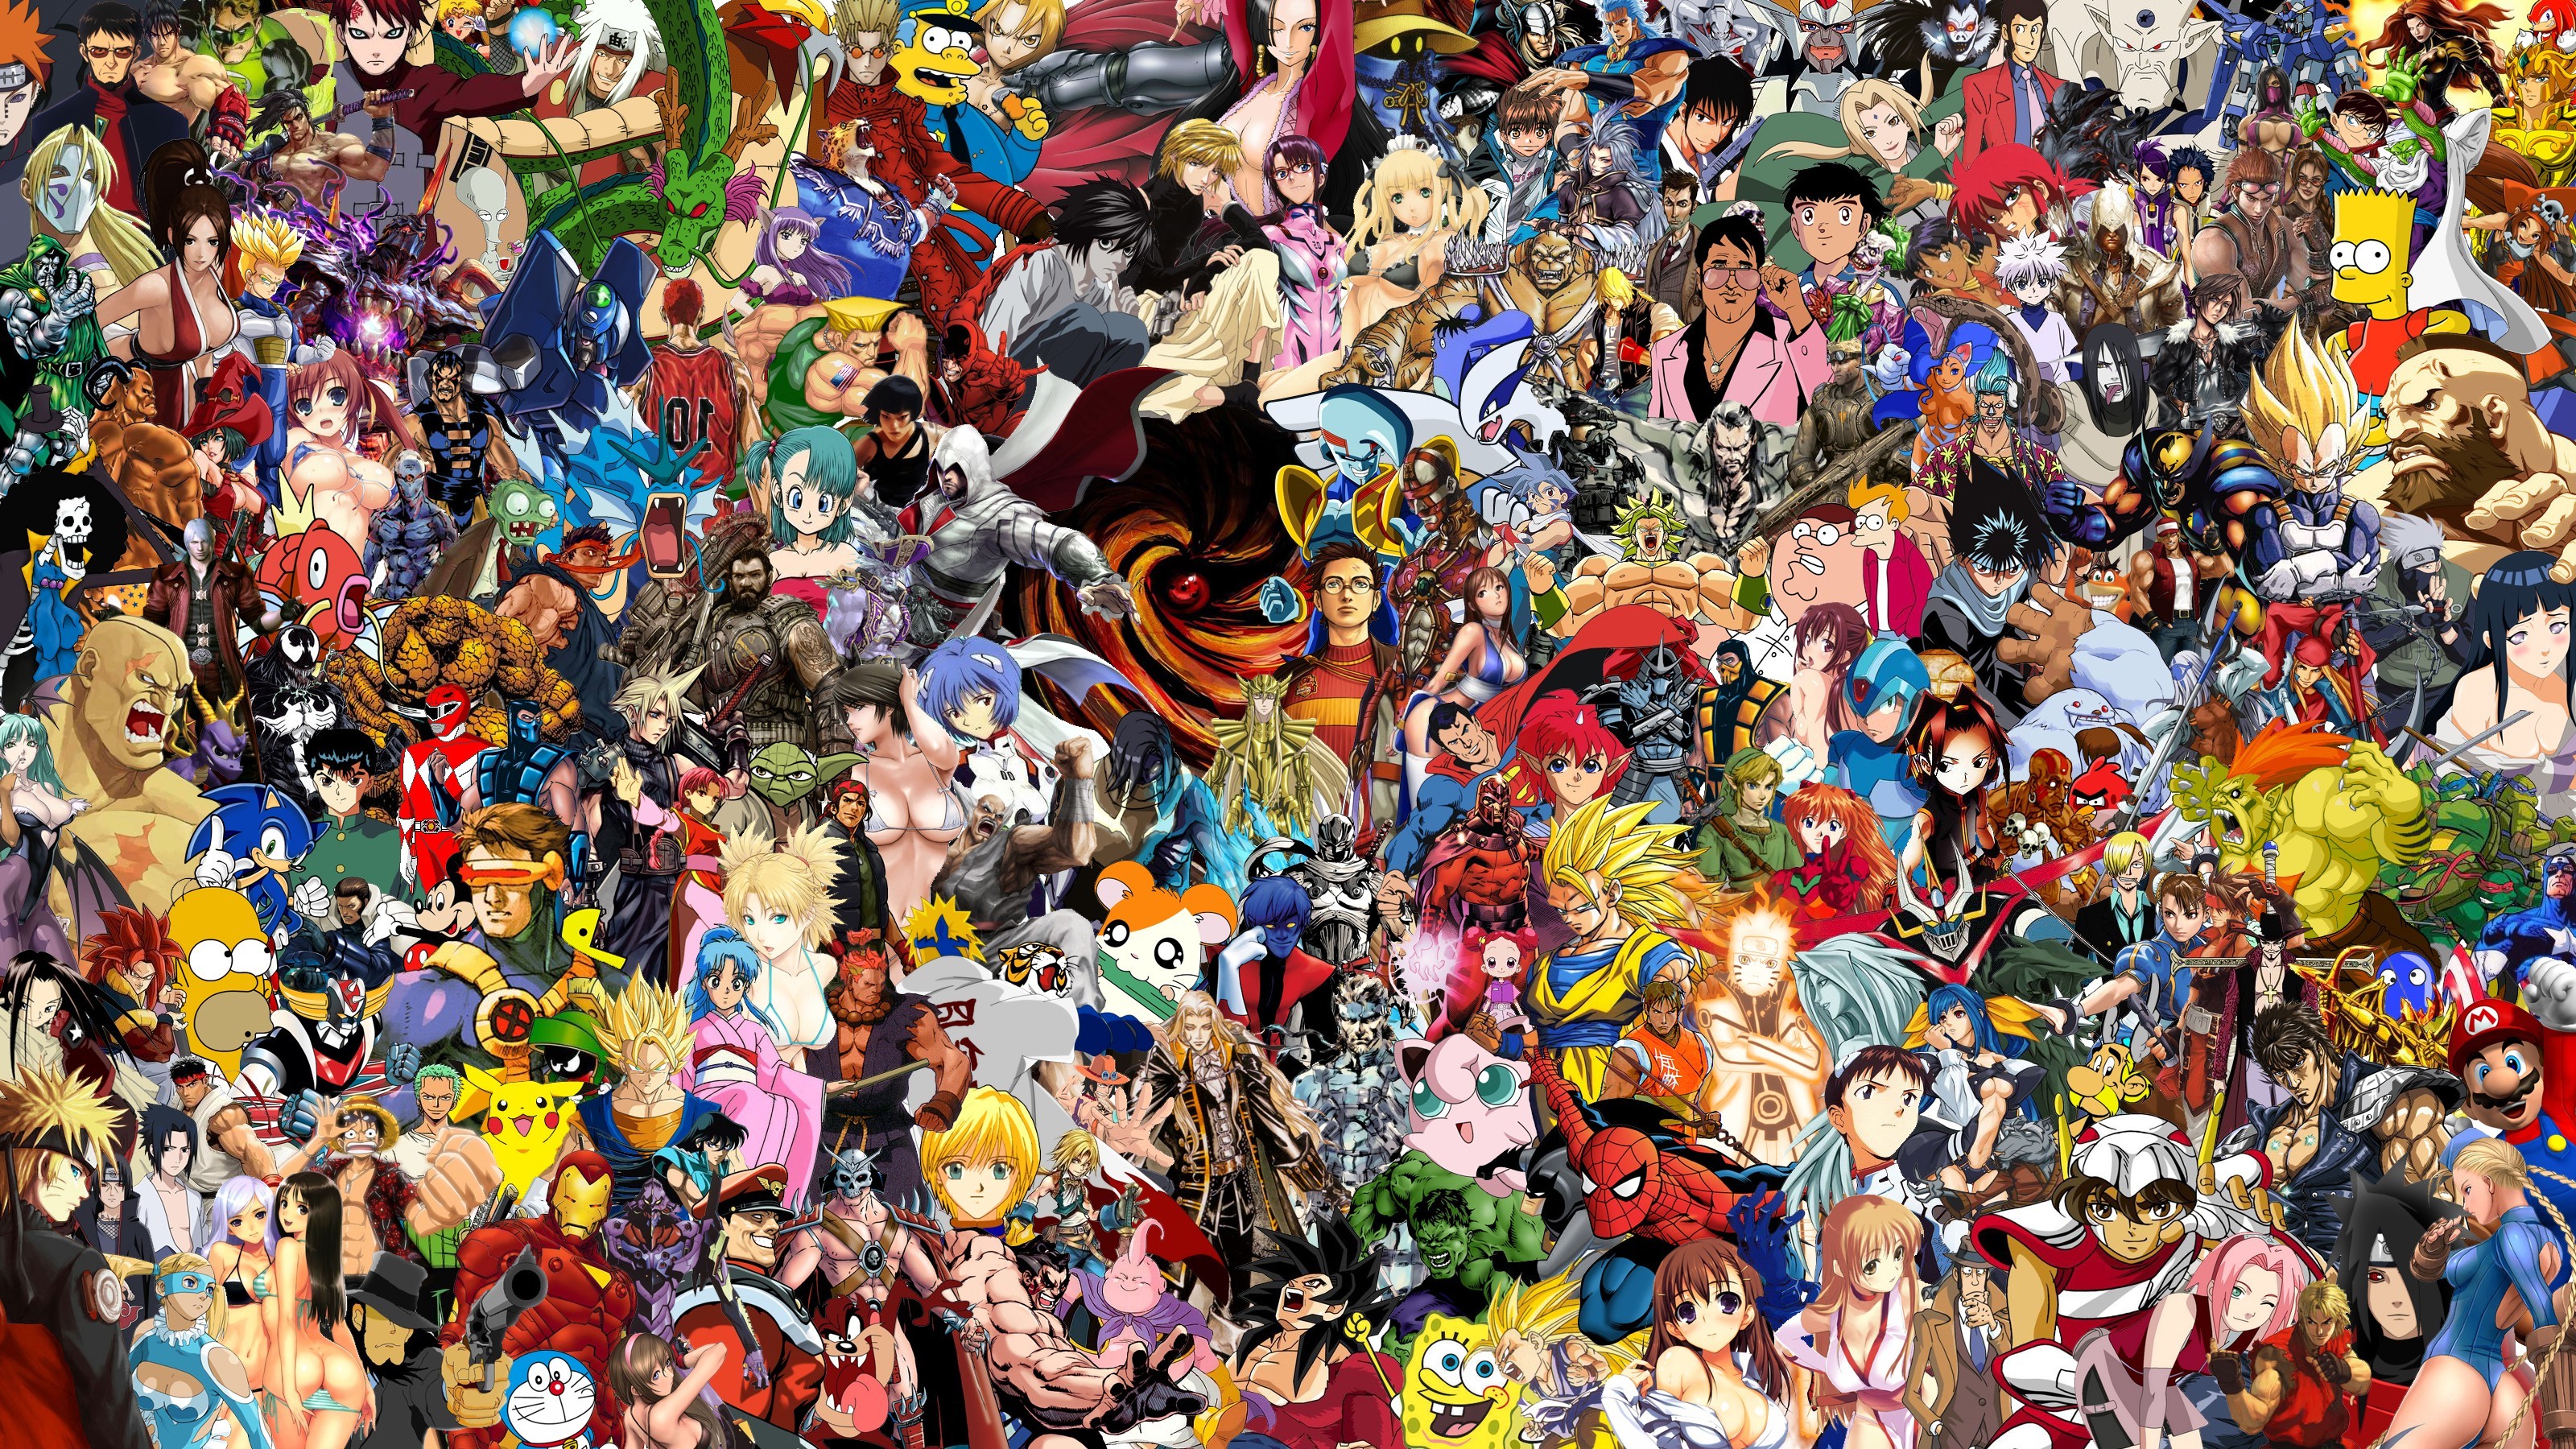 todo fondo de pantalla de anime,personas,multitud,arte,dibujos animados,collage